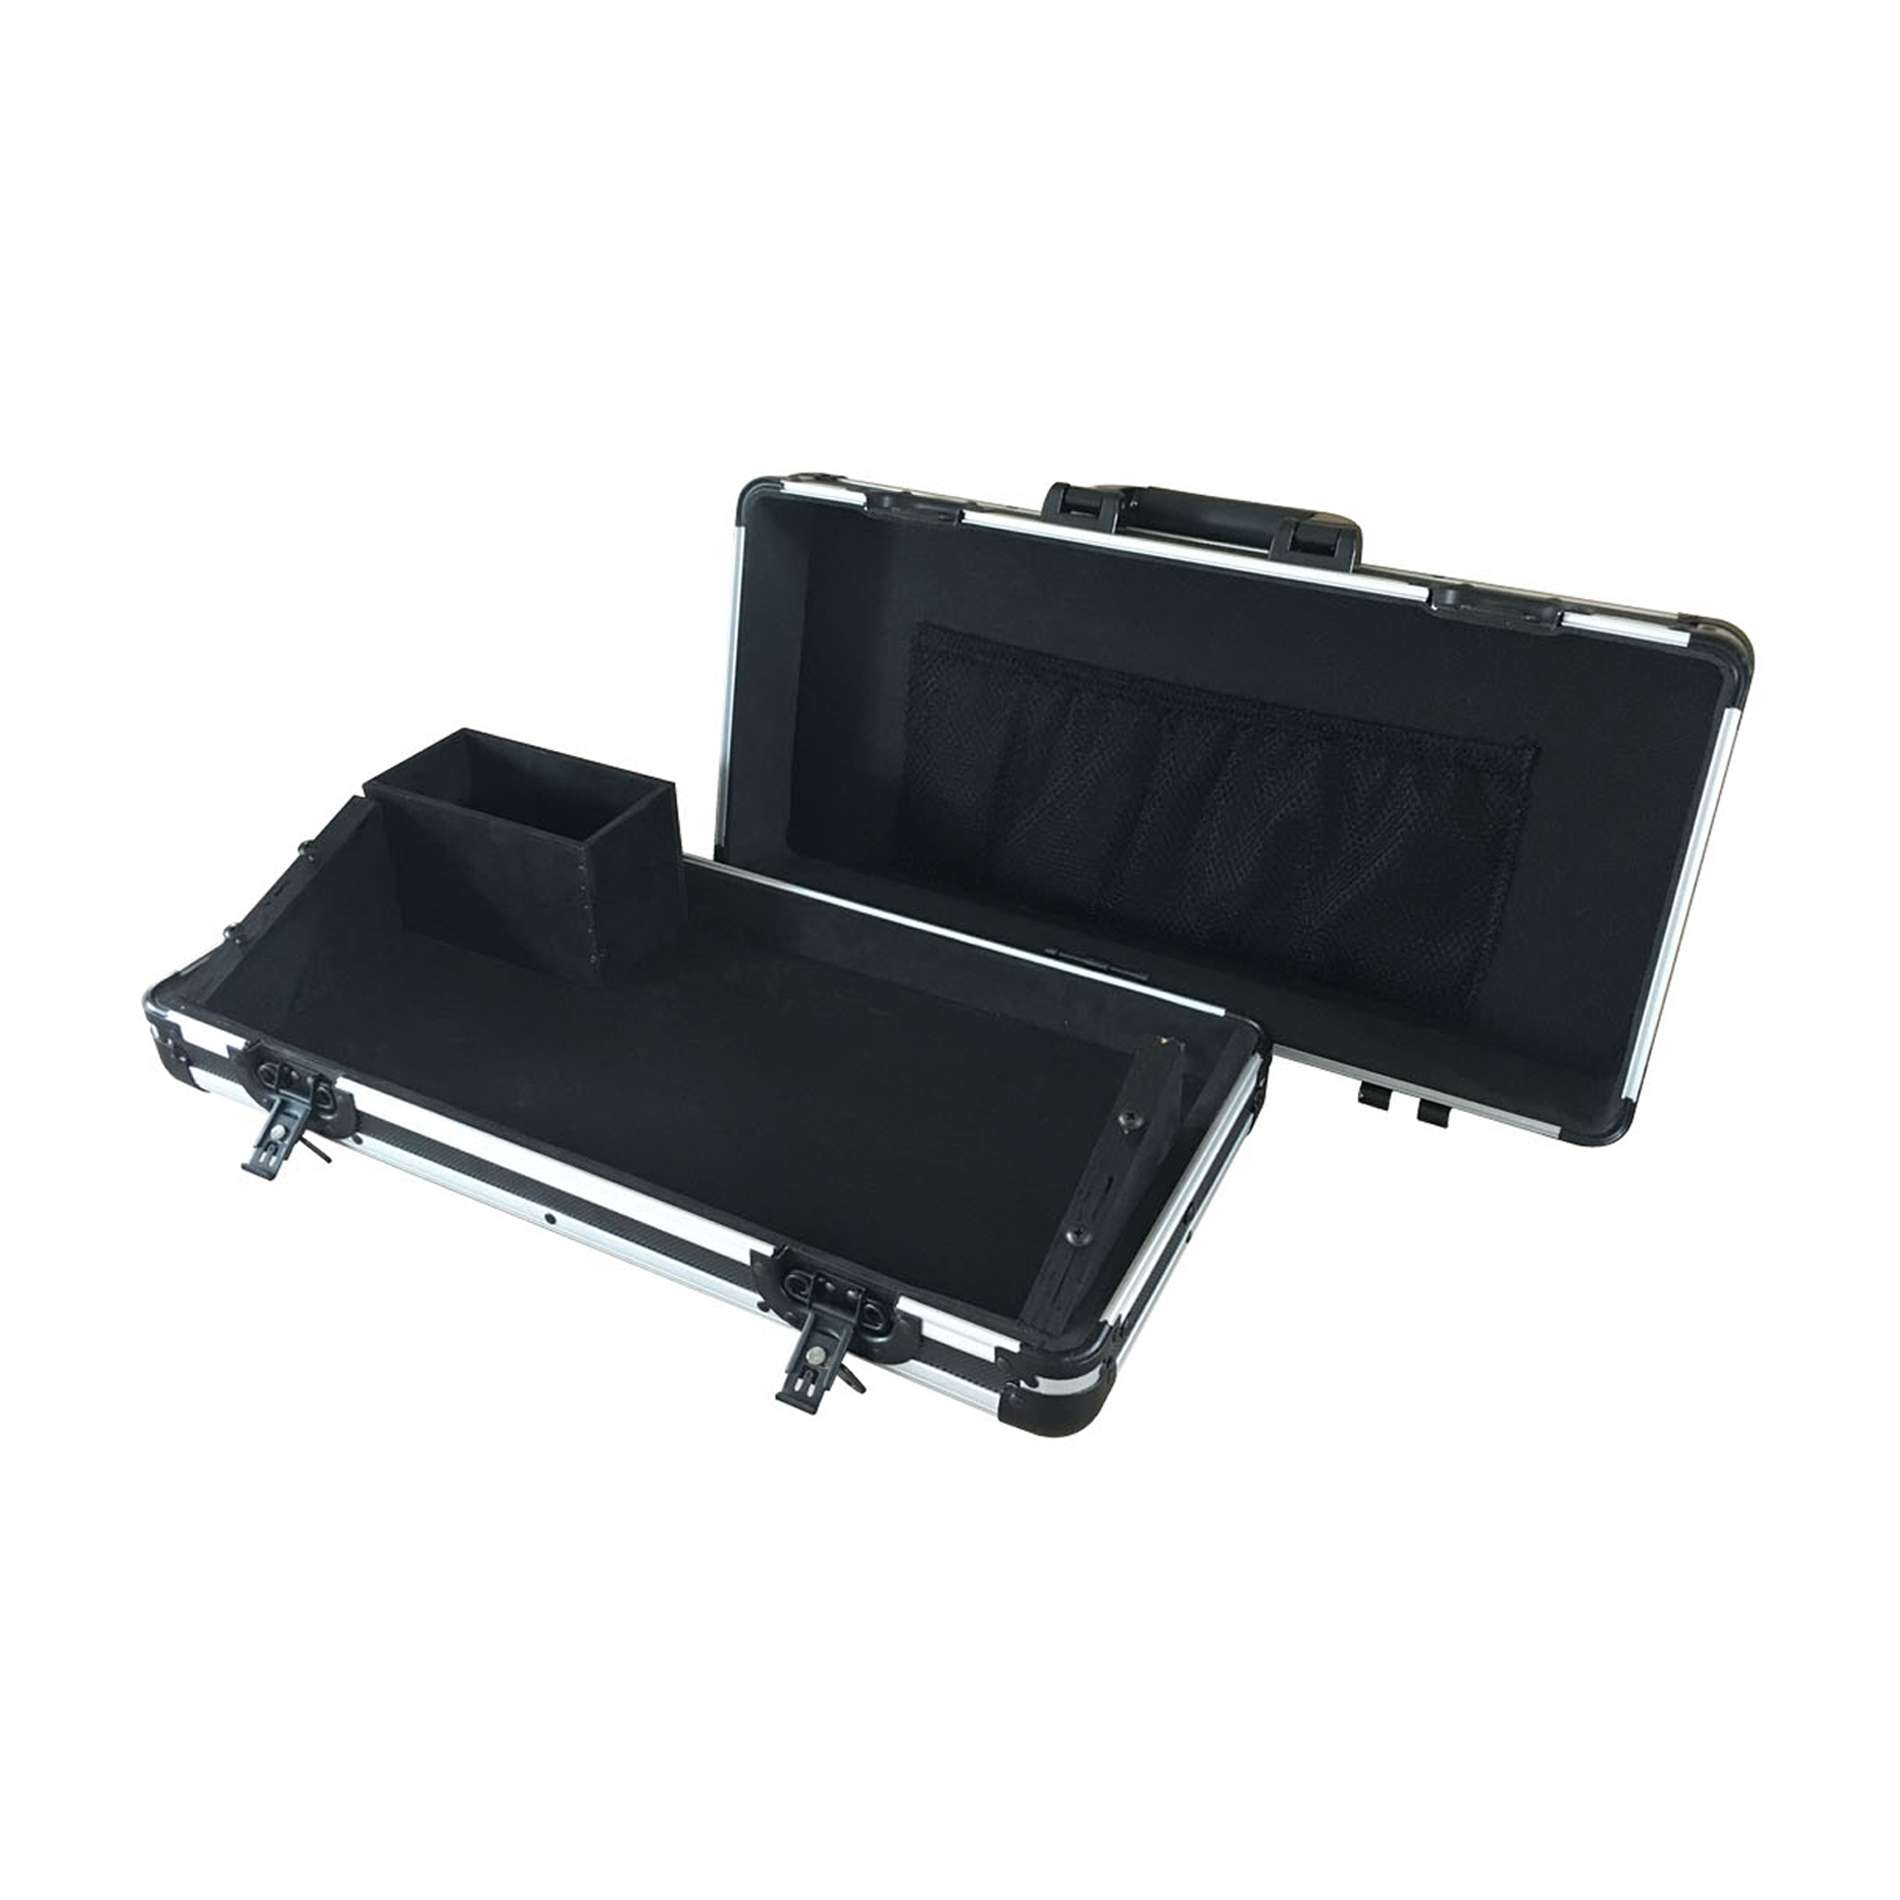 Power Acoustics Fl Dmx Controller - Bag & flightcase for lighting equipment - Variation 1